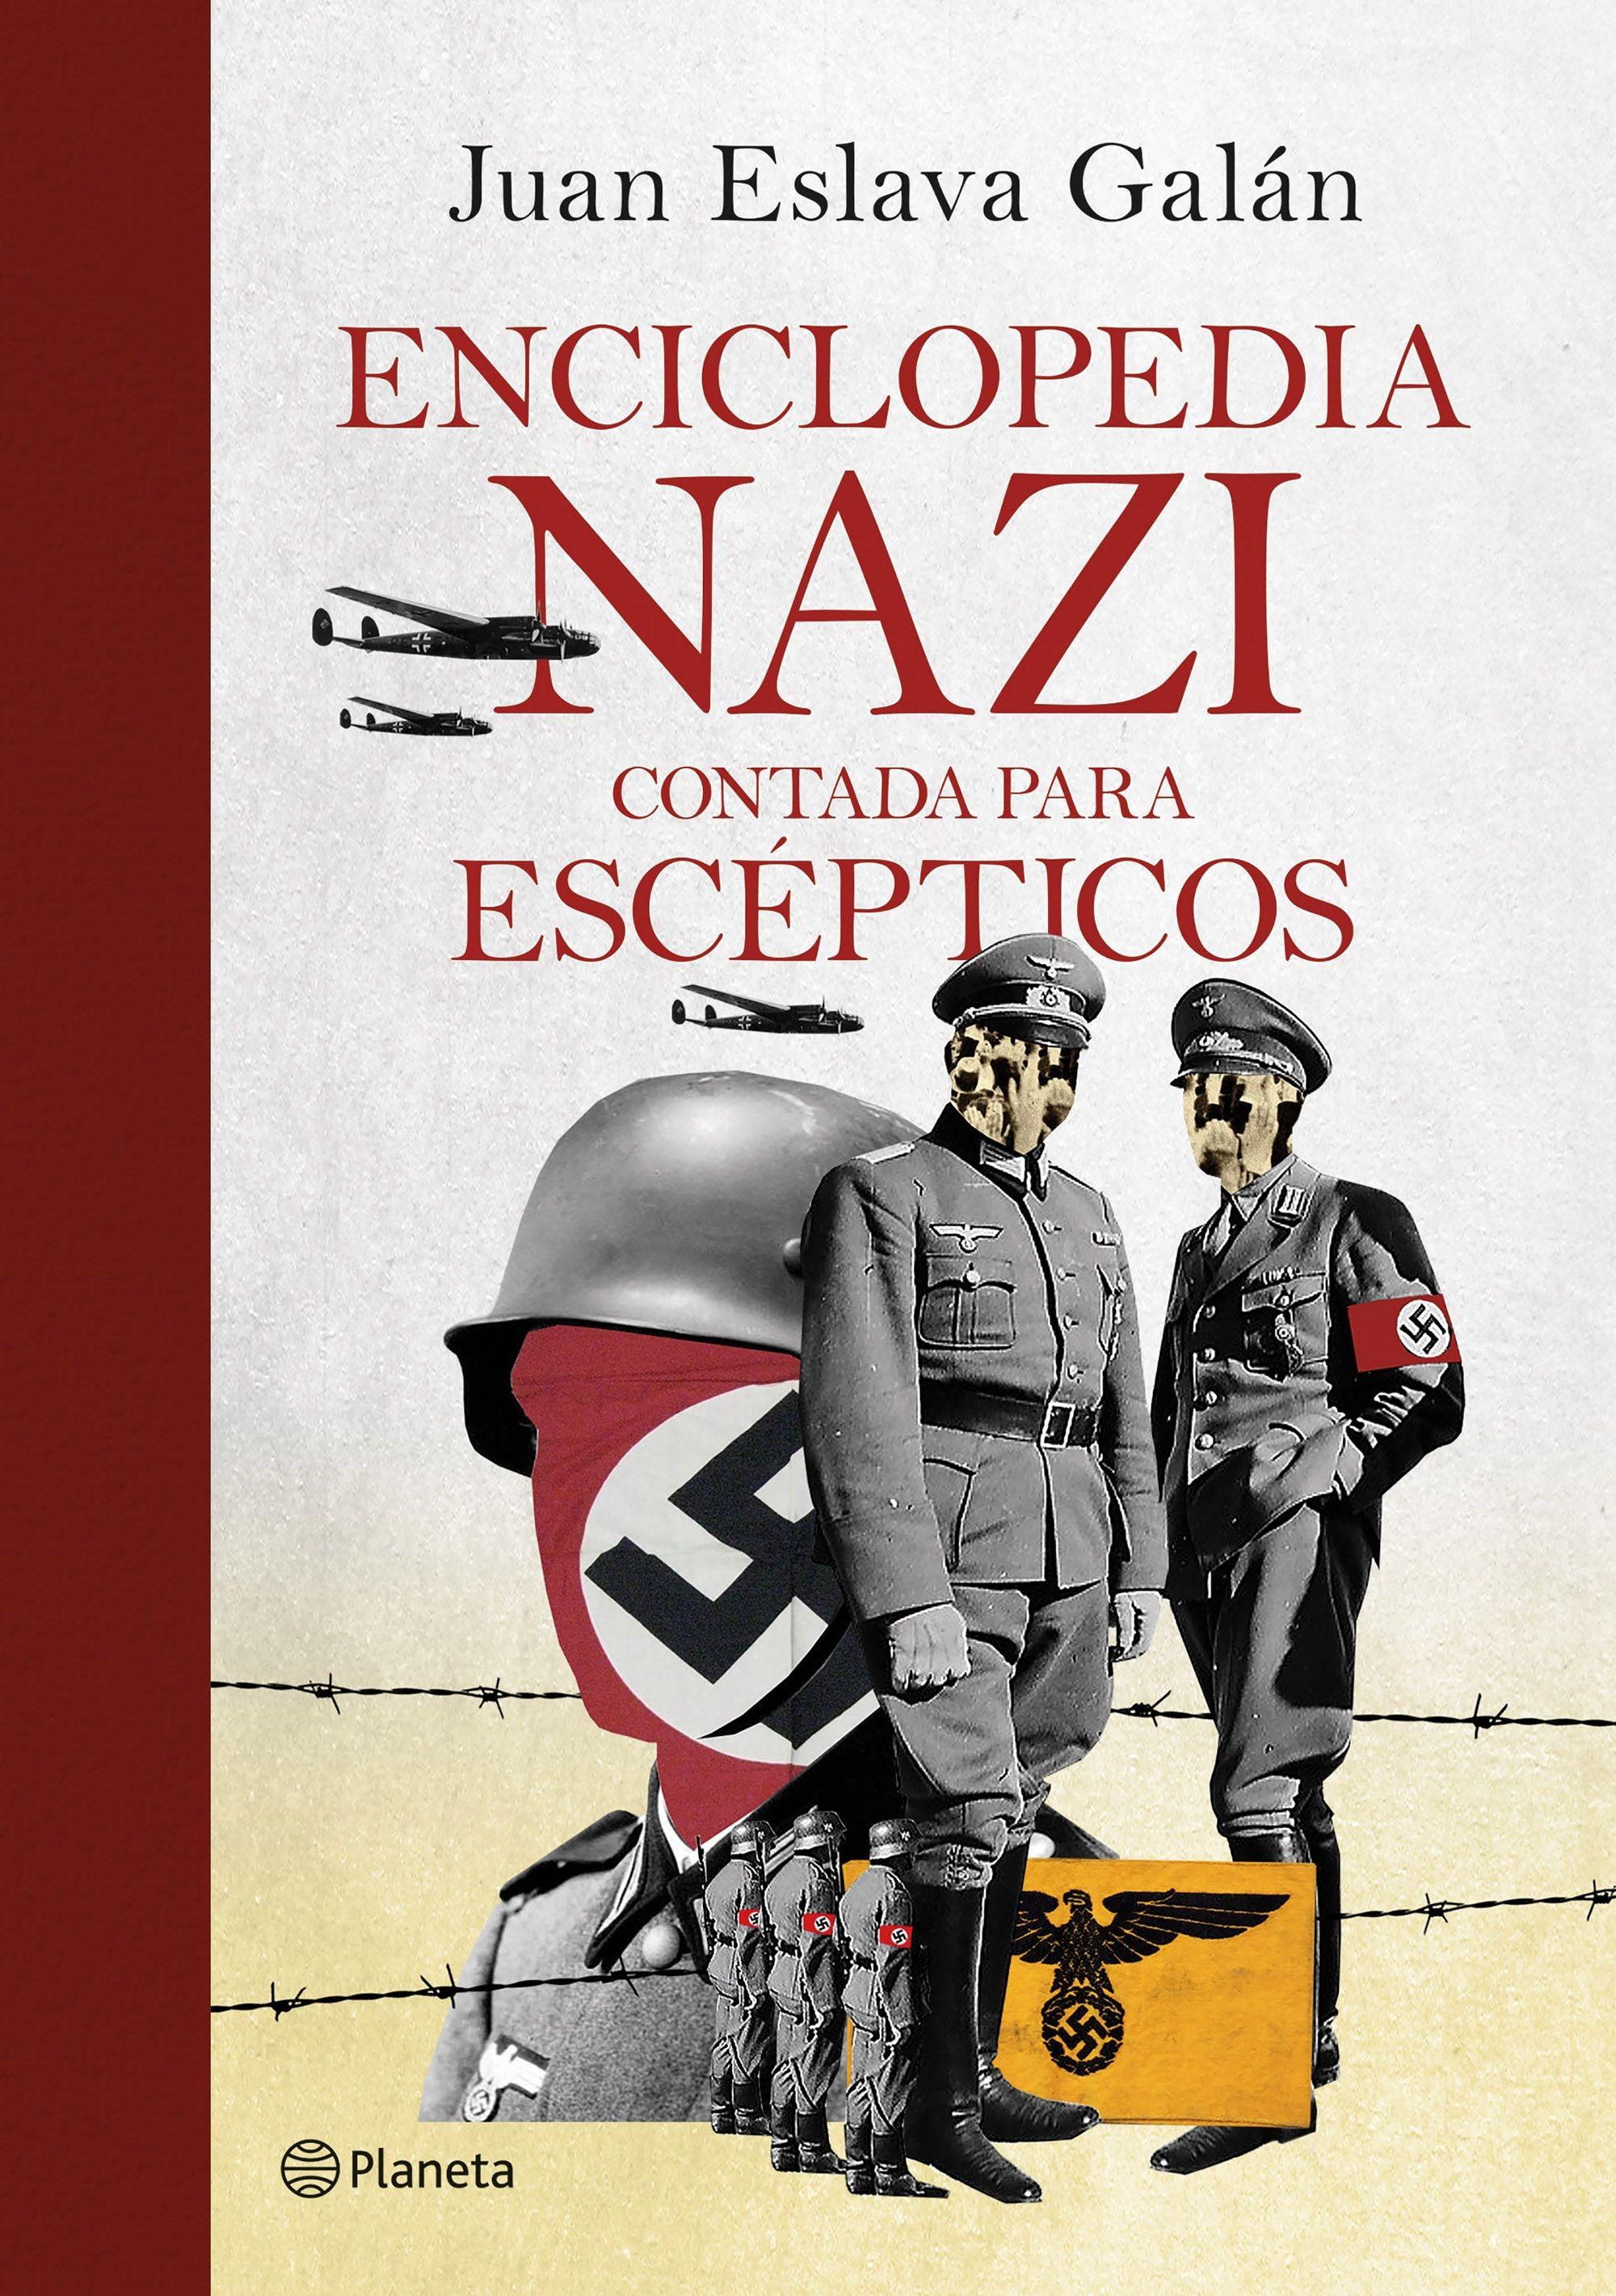 Enciclopedia nazi "Contada para escépticos"